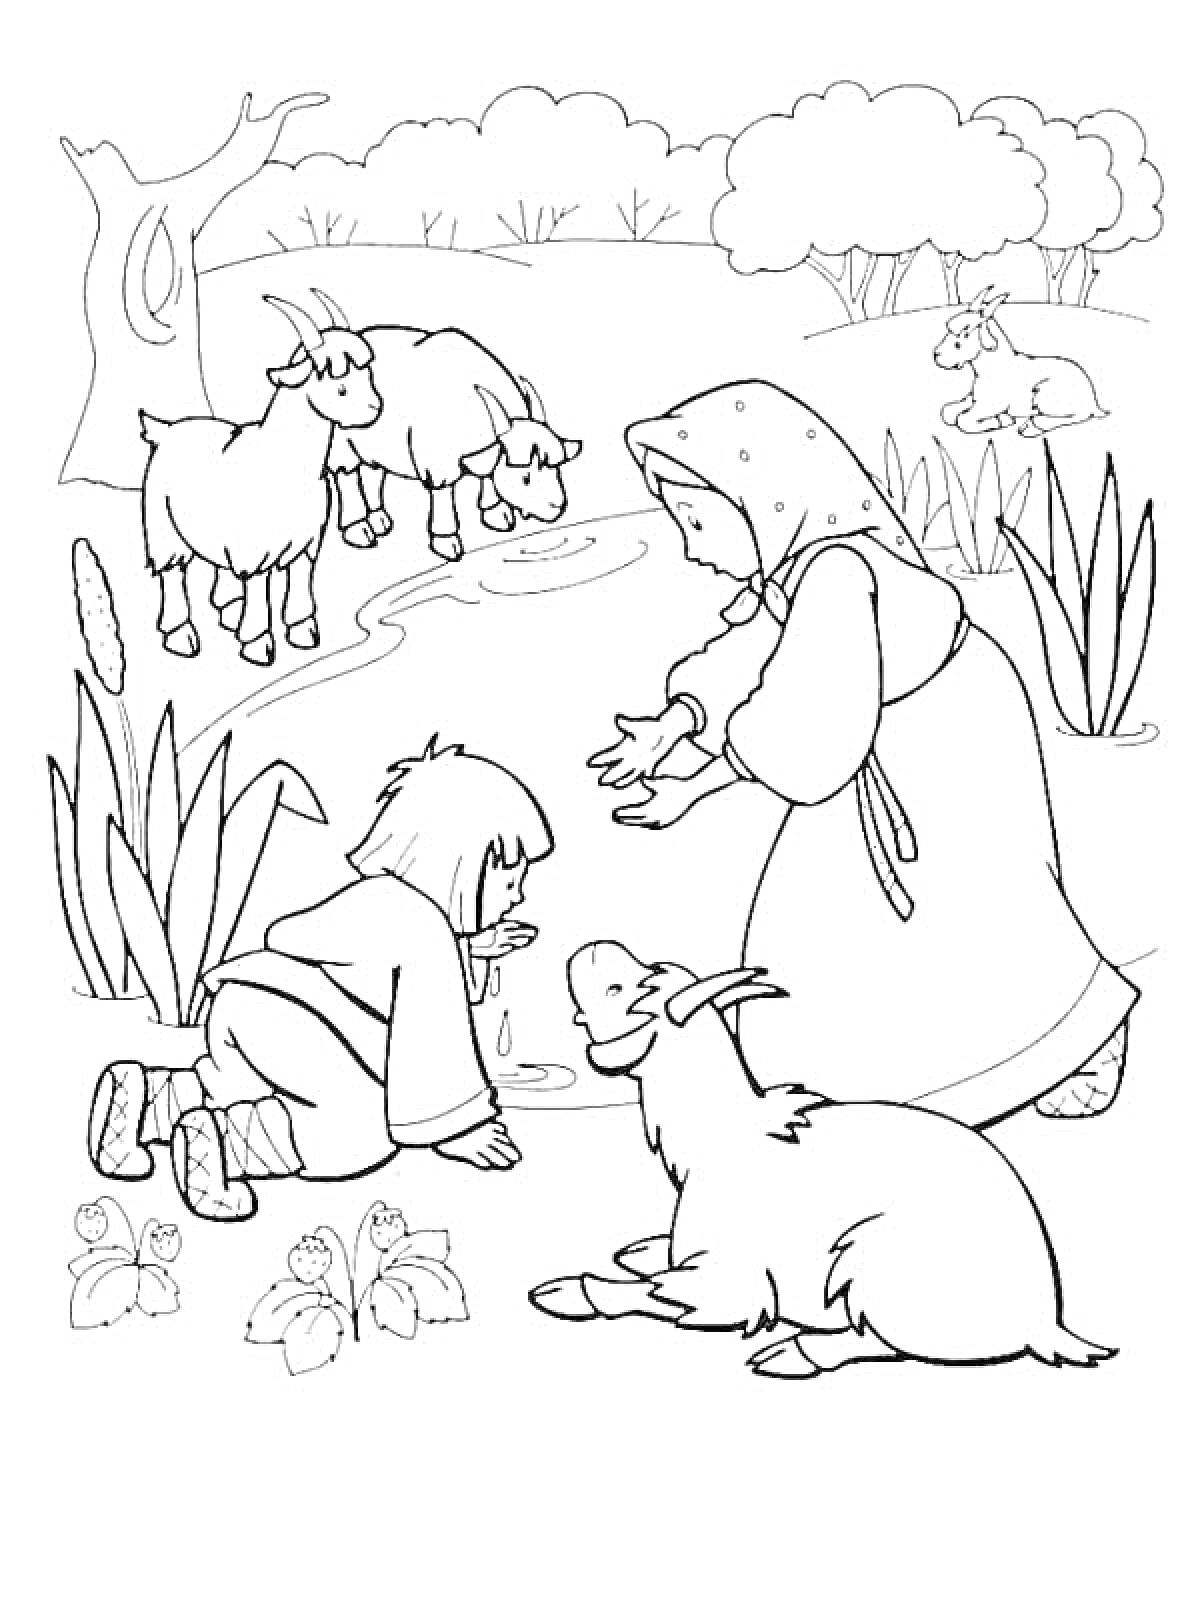 Сестрица Аленушка и братец Иванушка у ручья с козами в лесу